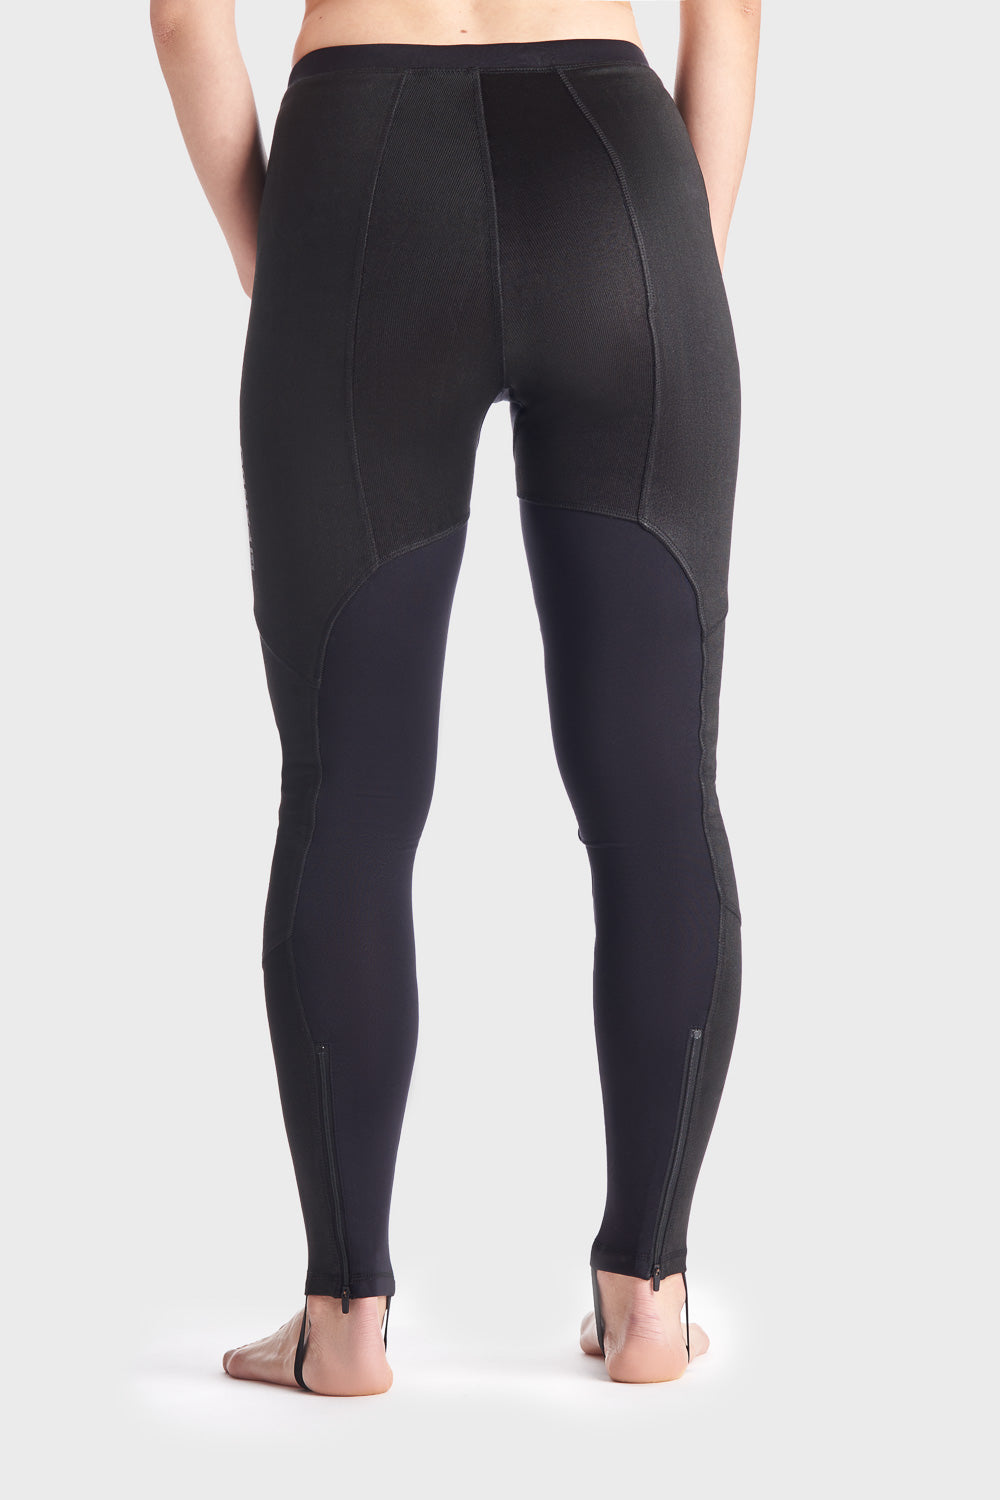 Woman's legs and bottom wearing Pando Moto SKIN AAA armoured base layer leggings in black